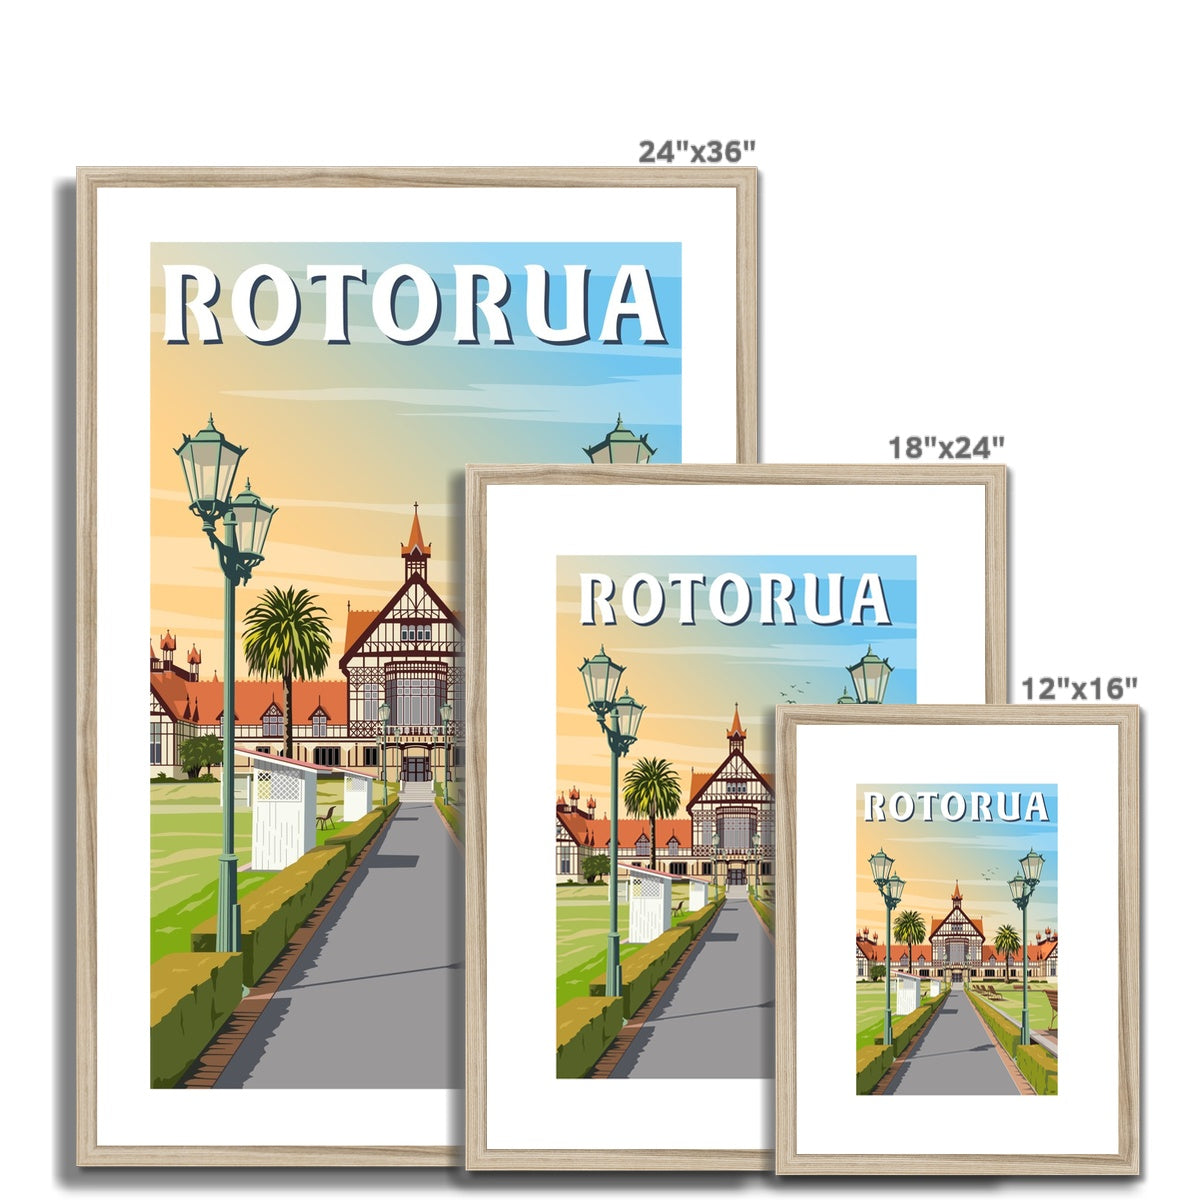 Rotorua Museum and Gardens Framed & Mounted Print